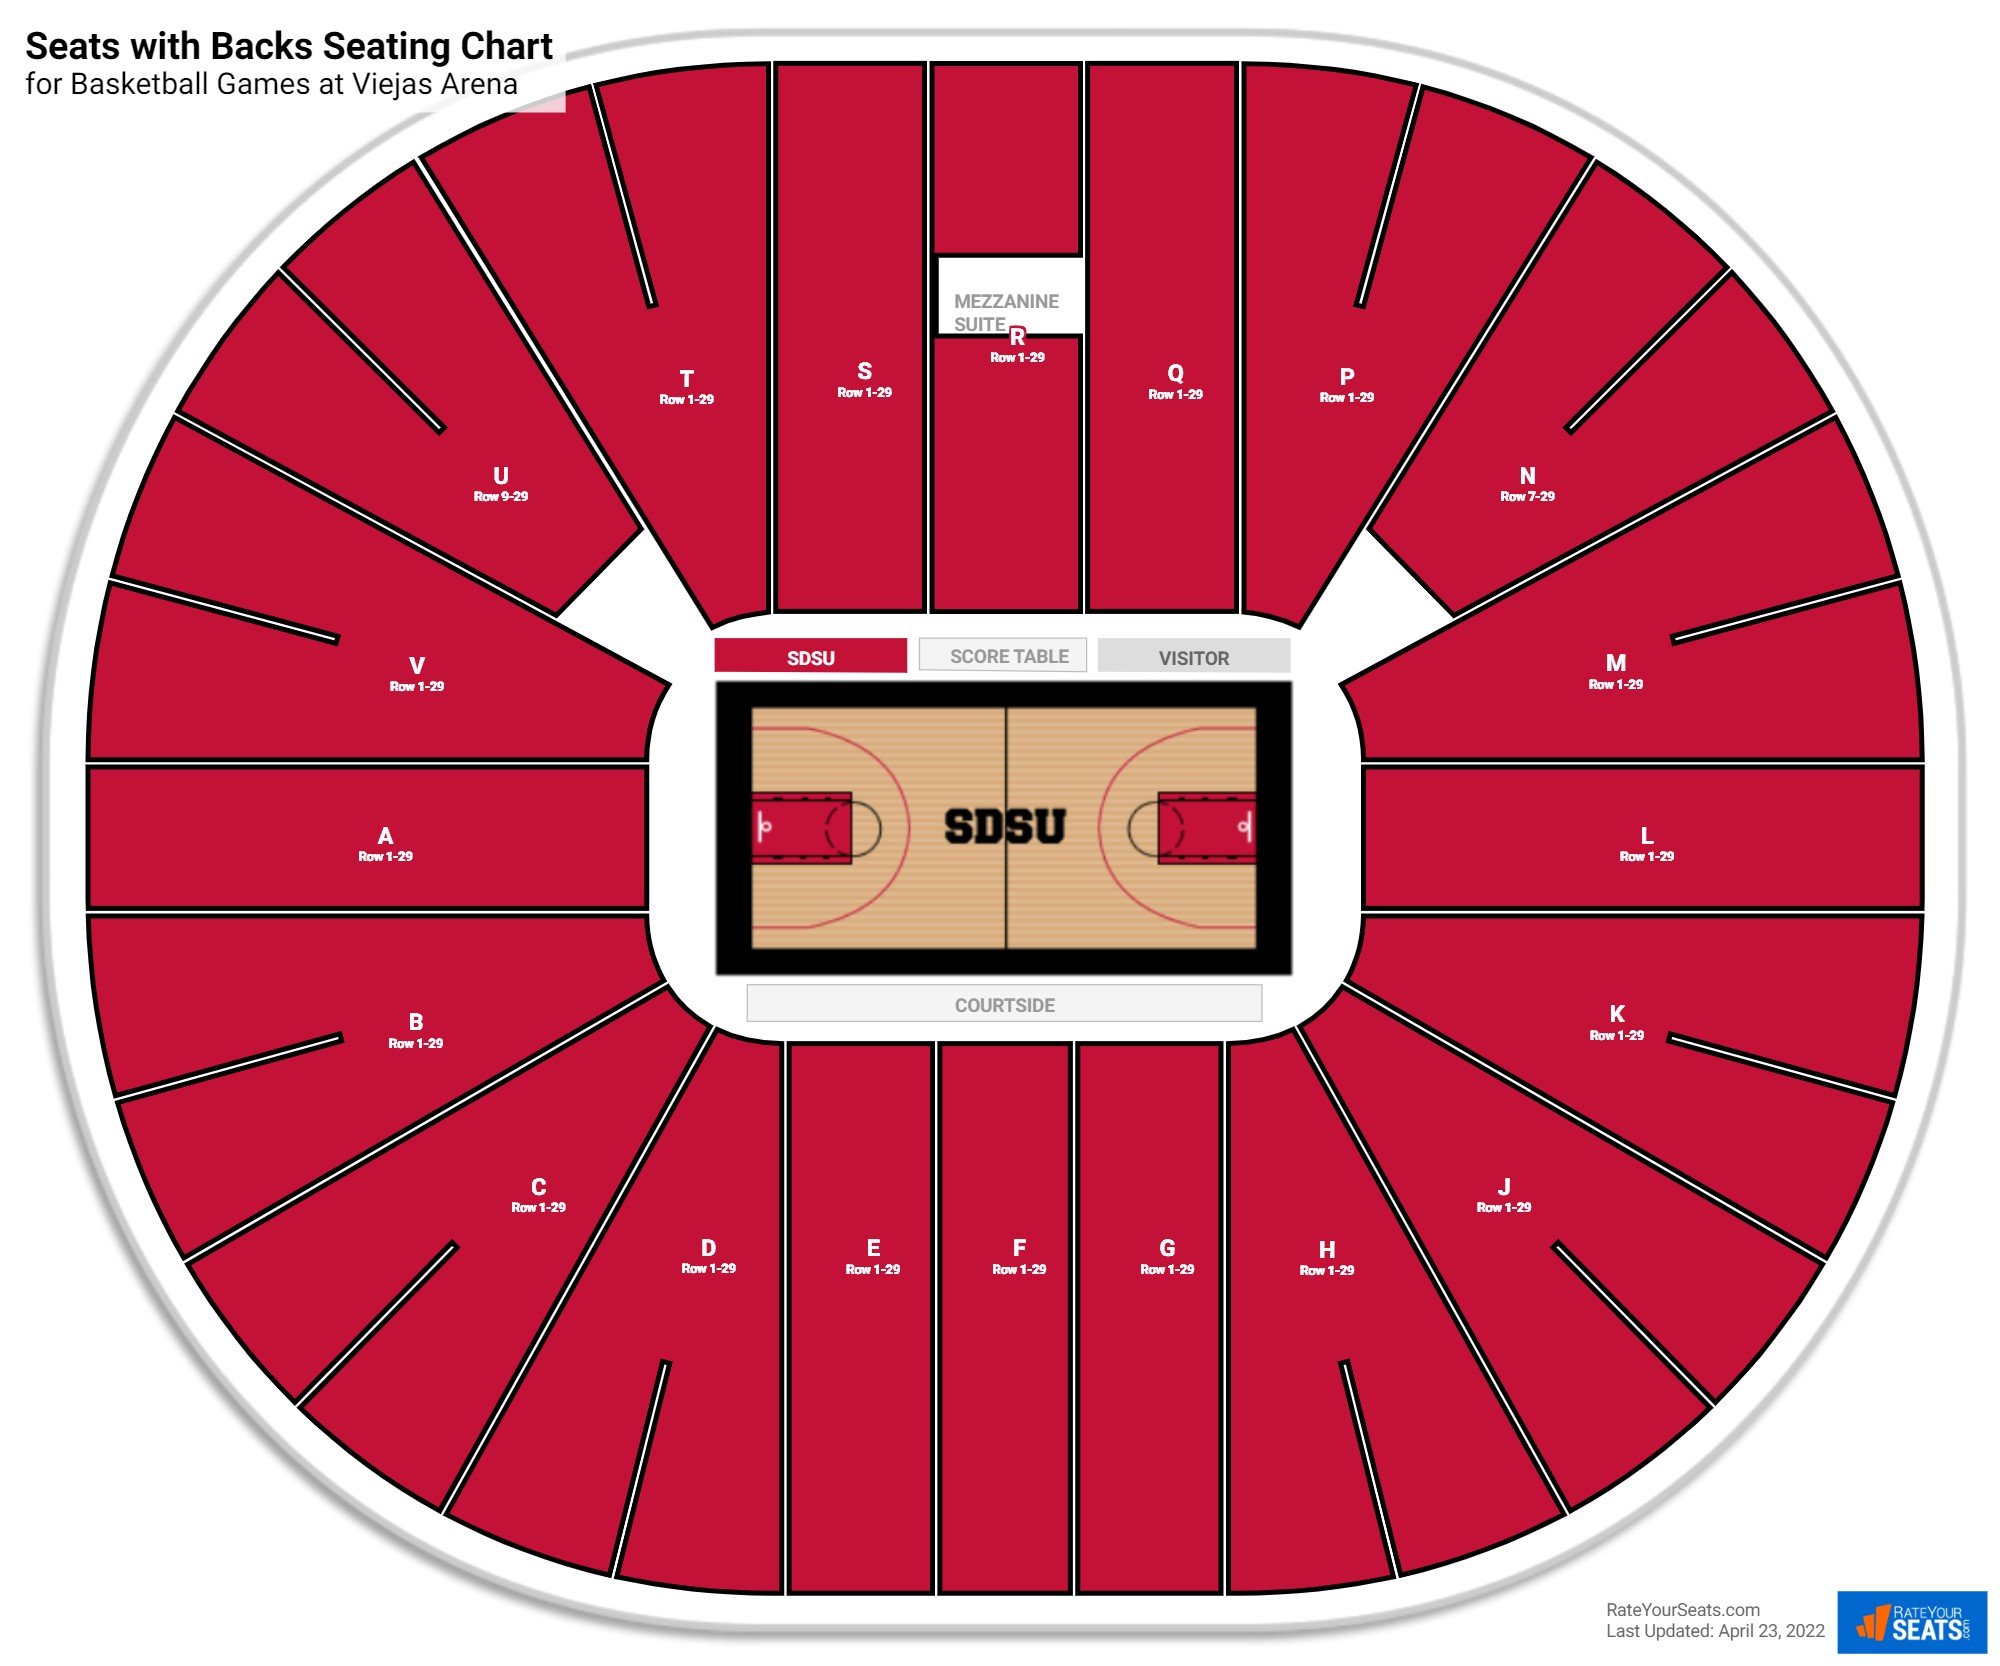 Basketball Seats with Backs Seating Chart at Viejas Arena